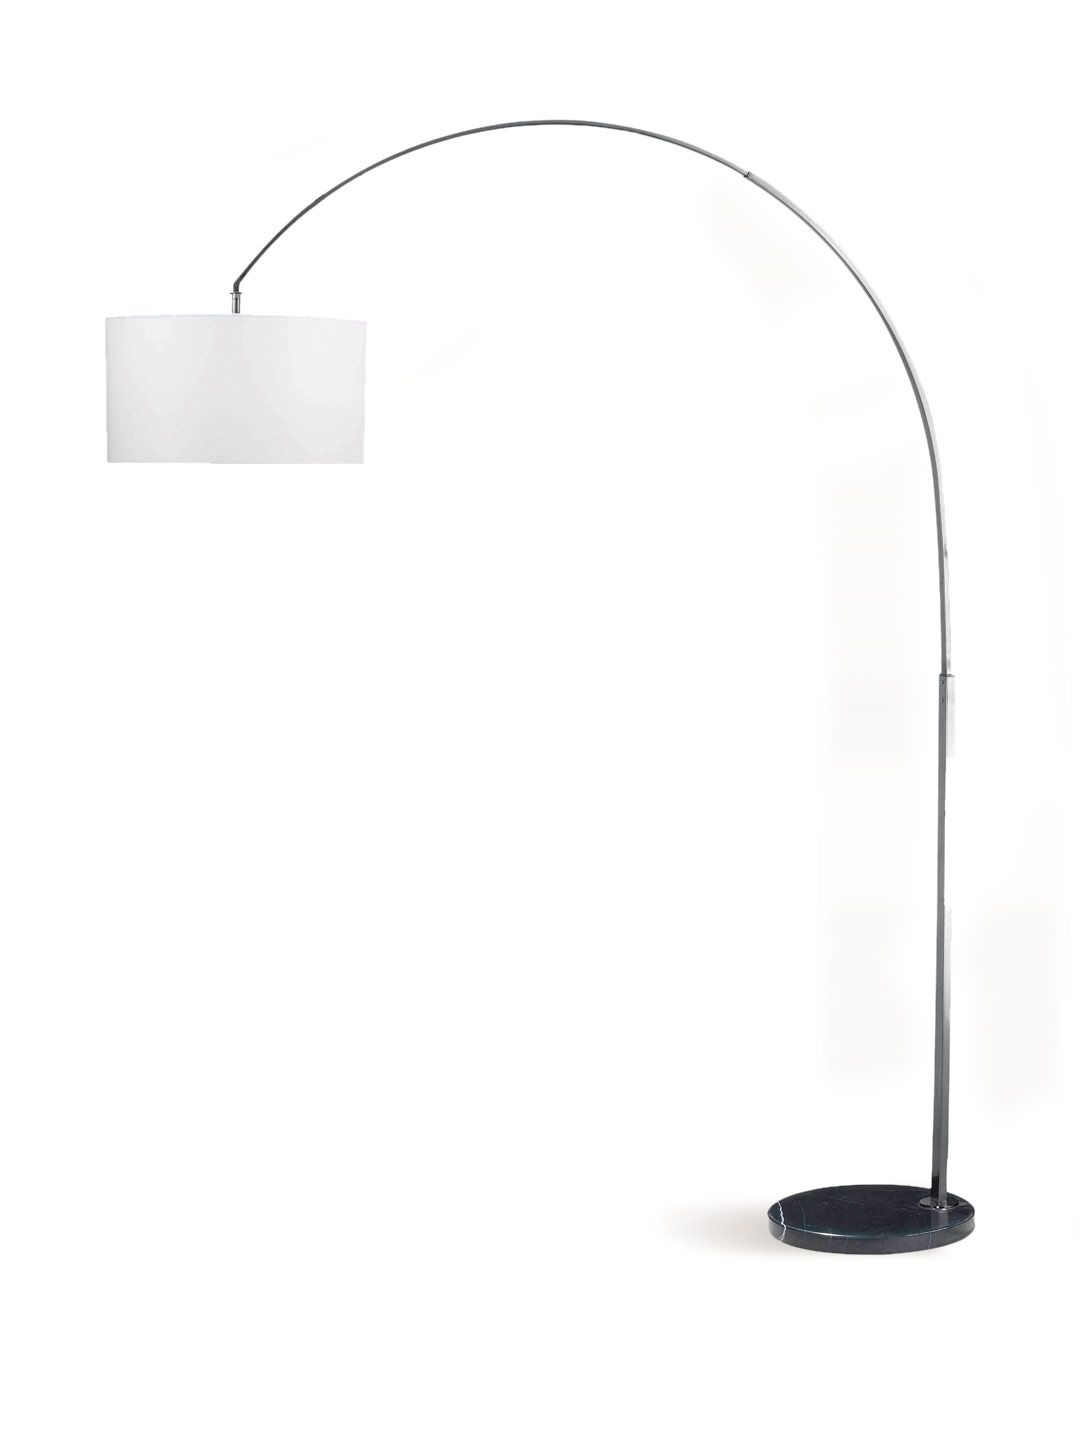 Design Craft Normandy Arc Floor Lamp 313 79 Gilt for dimensions 1080 X 1440